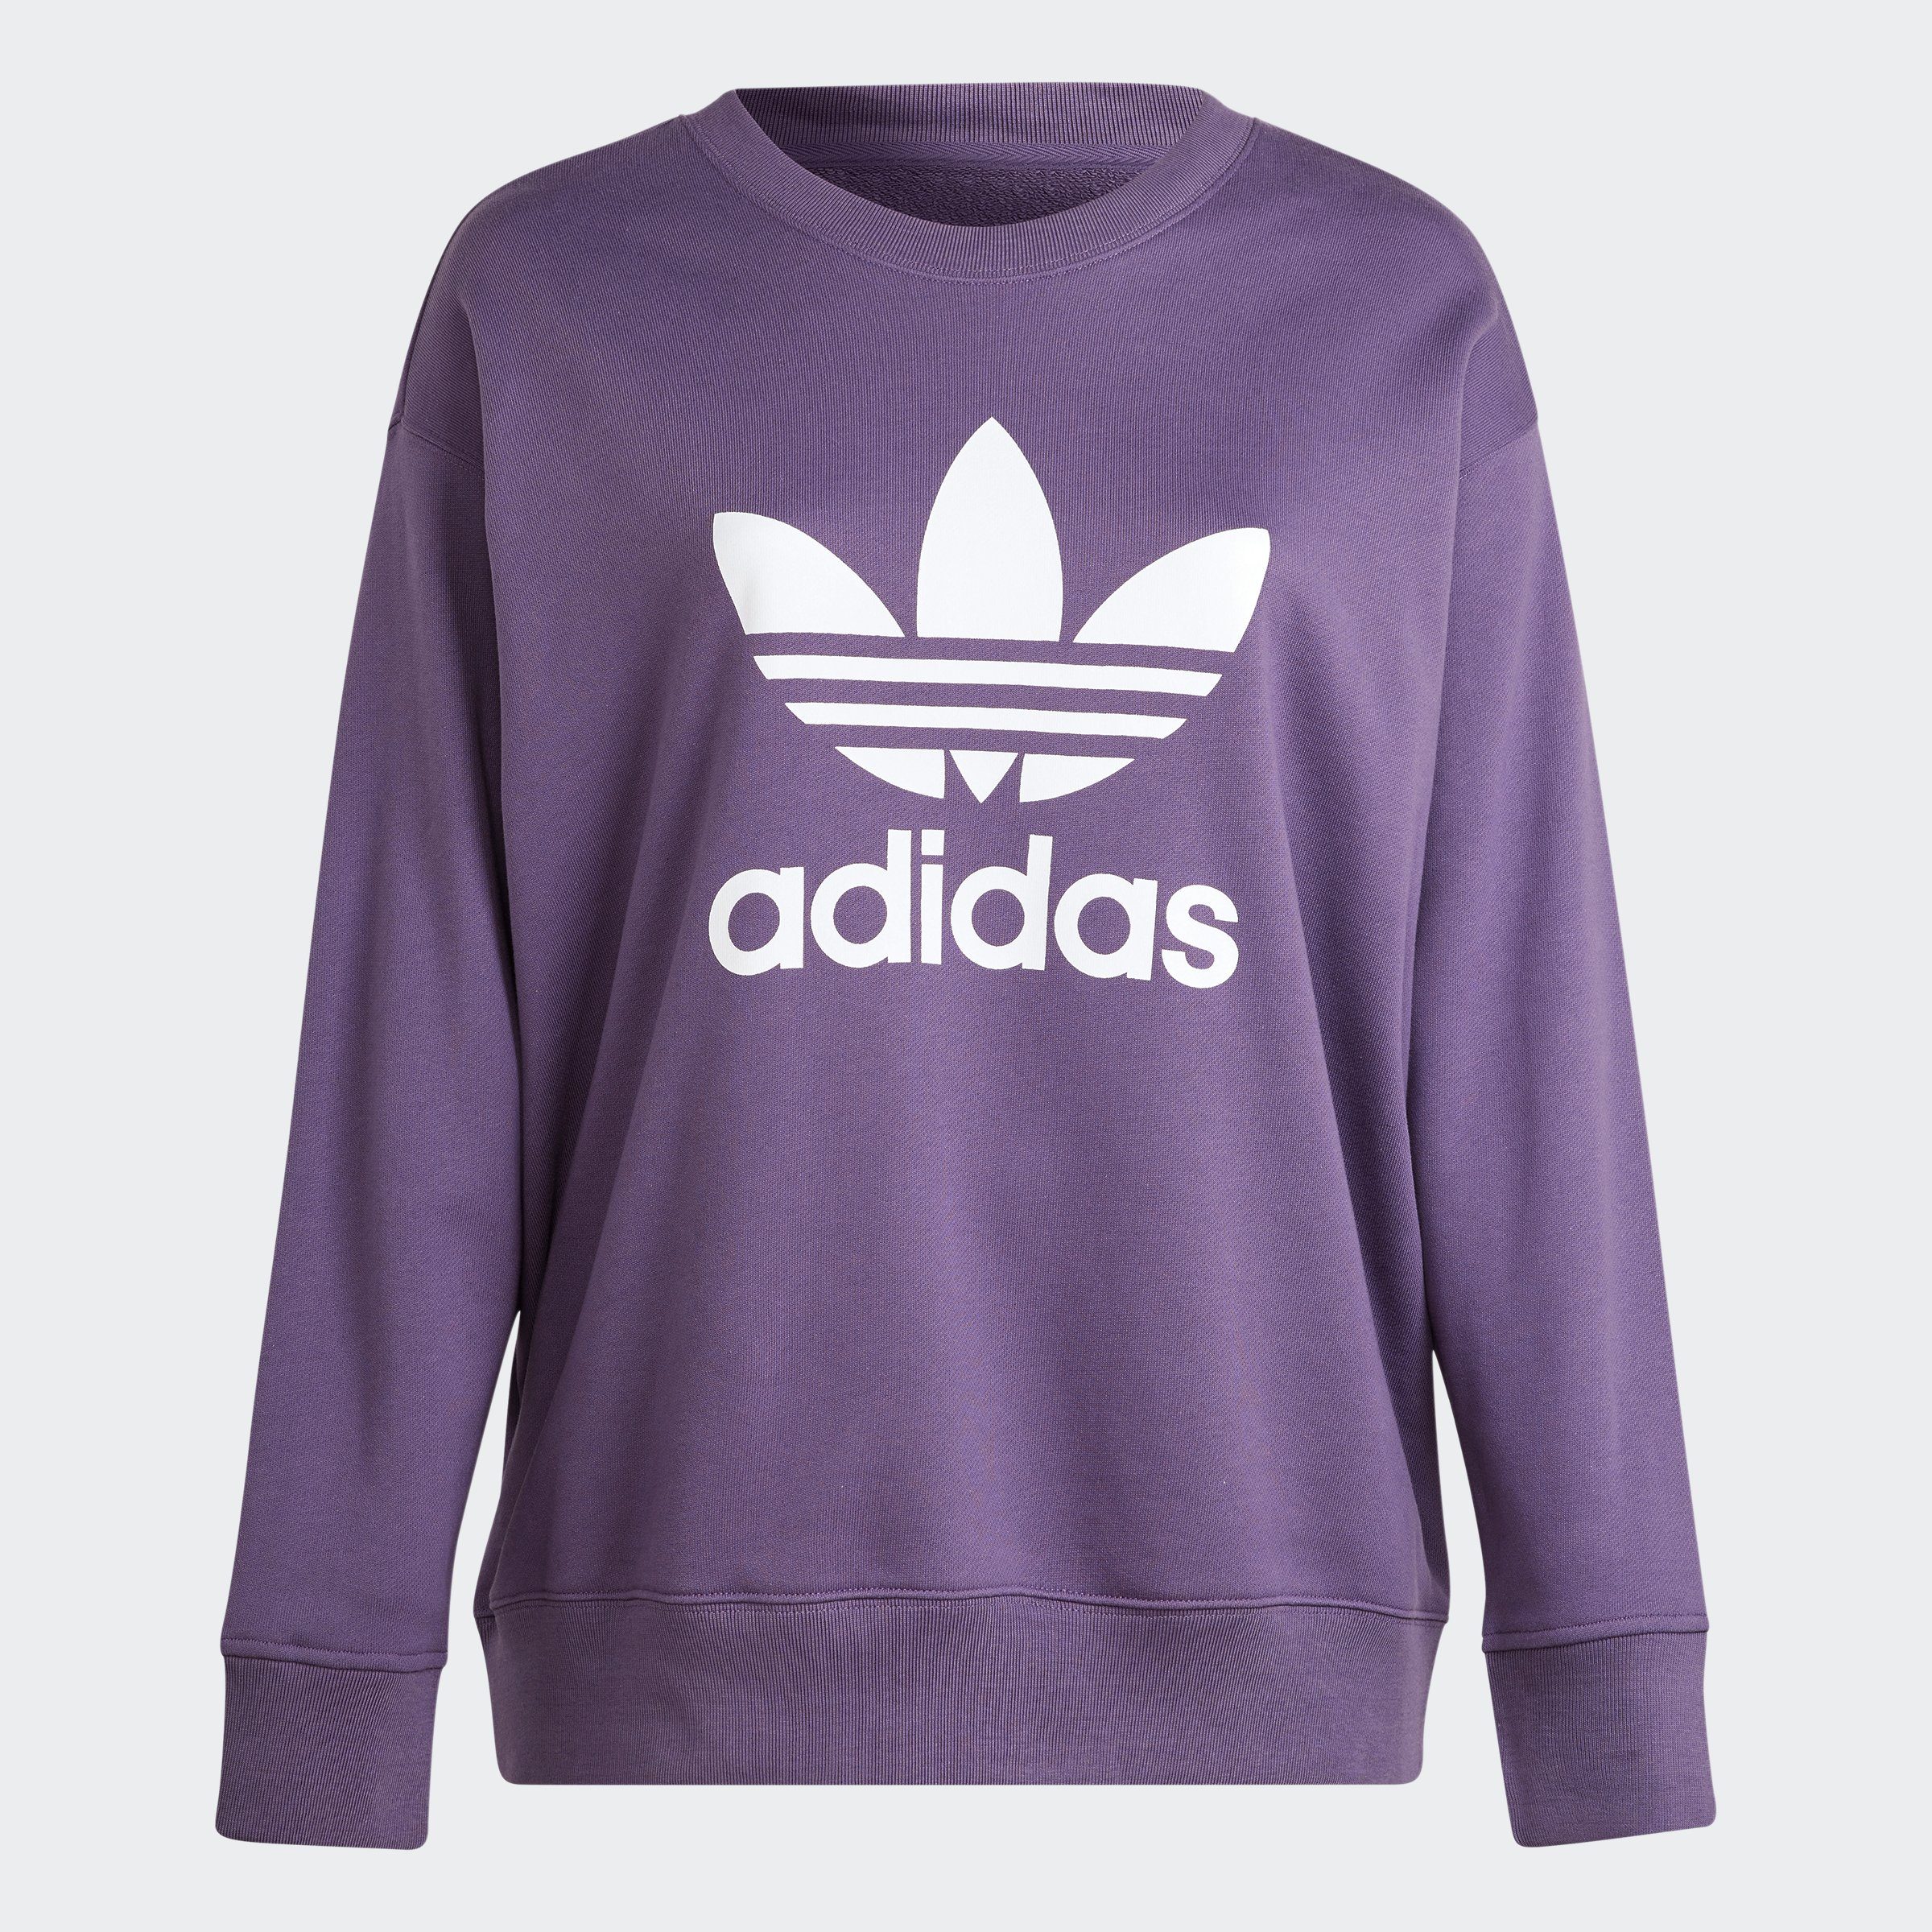 adidas TRF SWEAT Sweatshirt Originals CREW